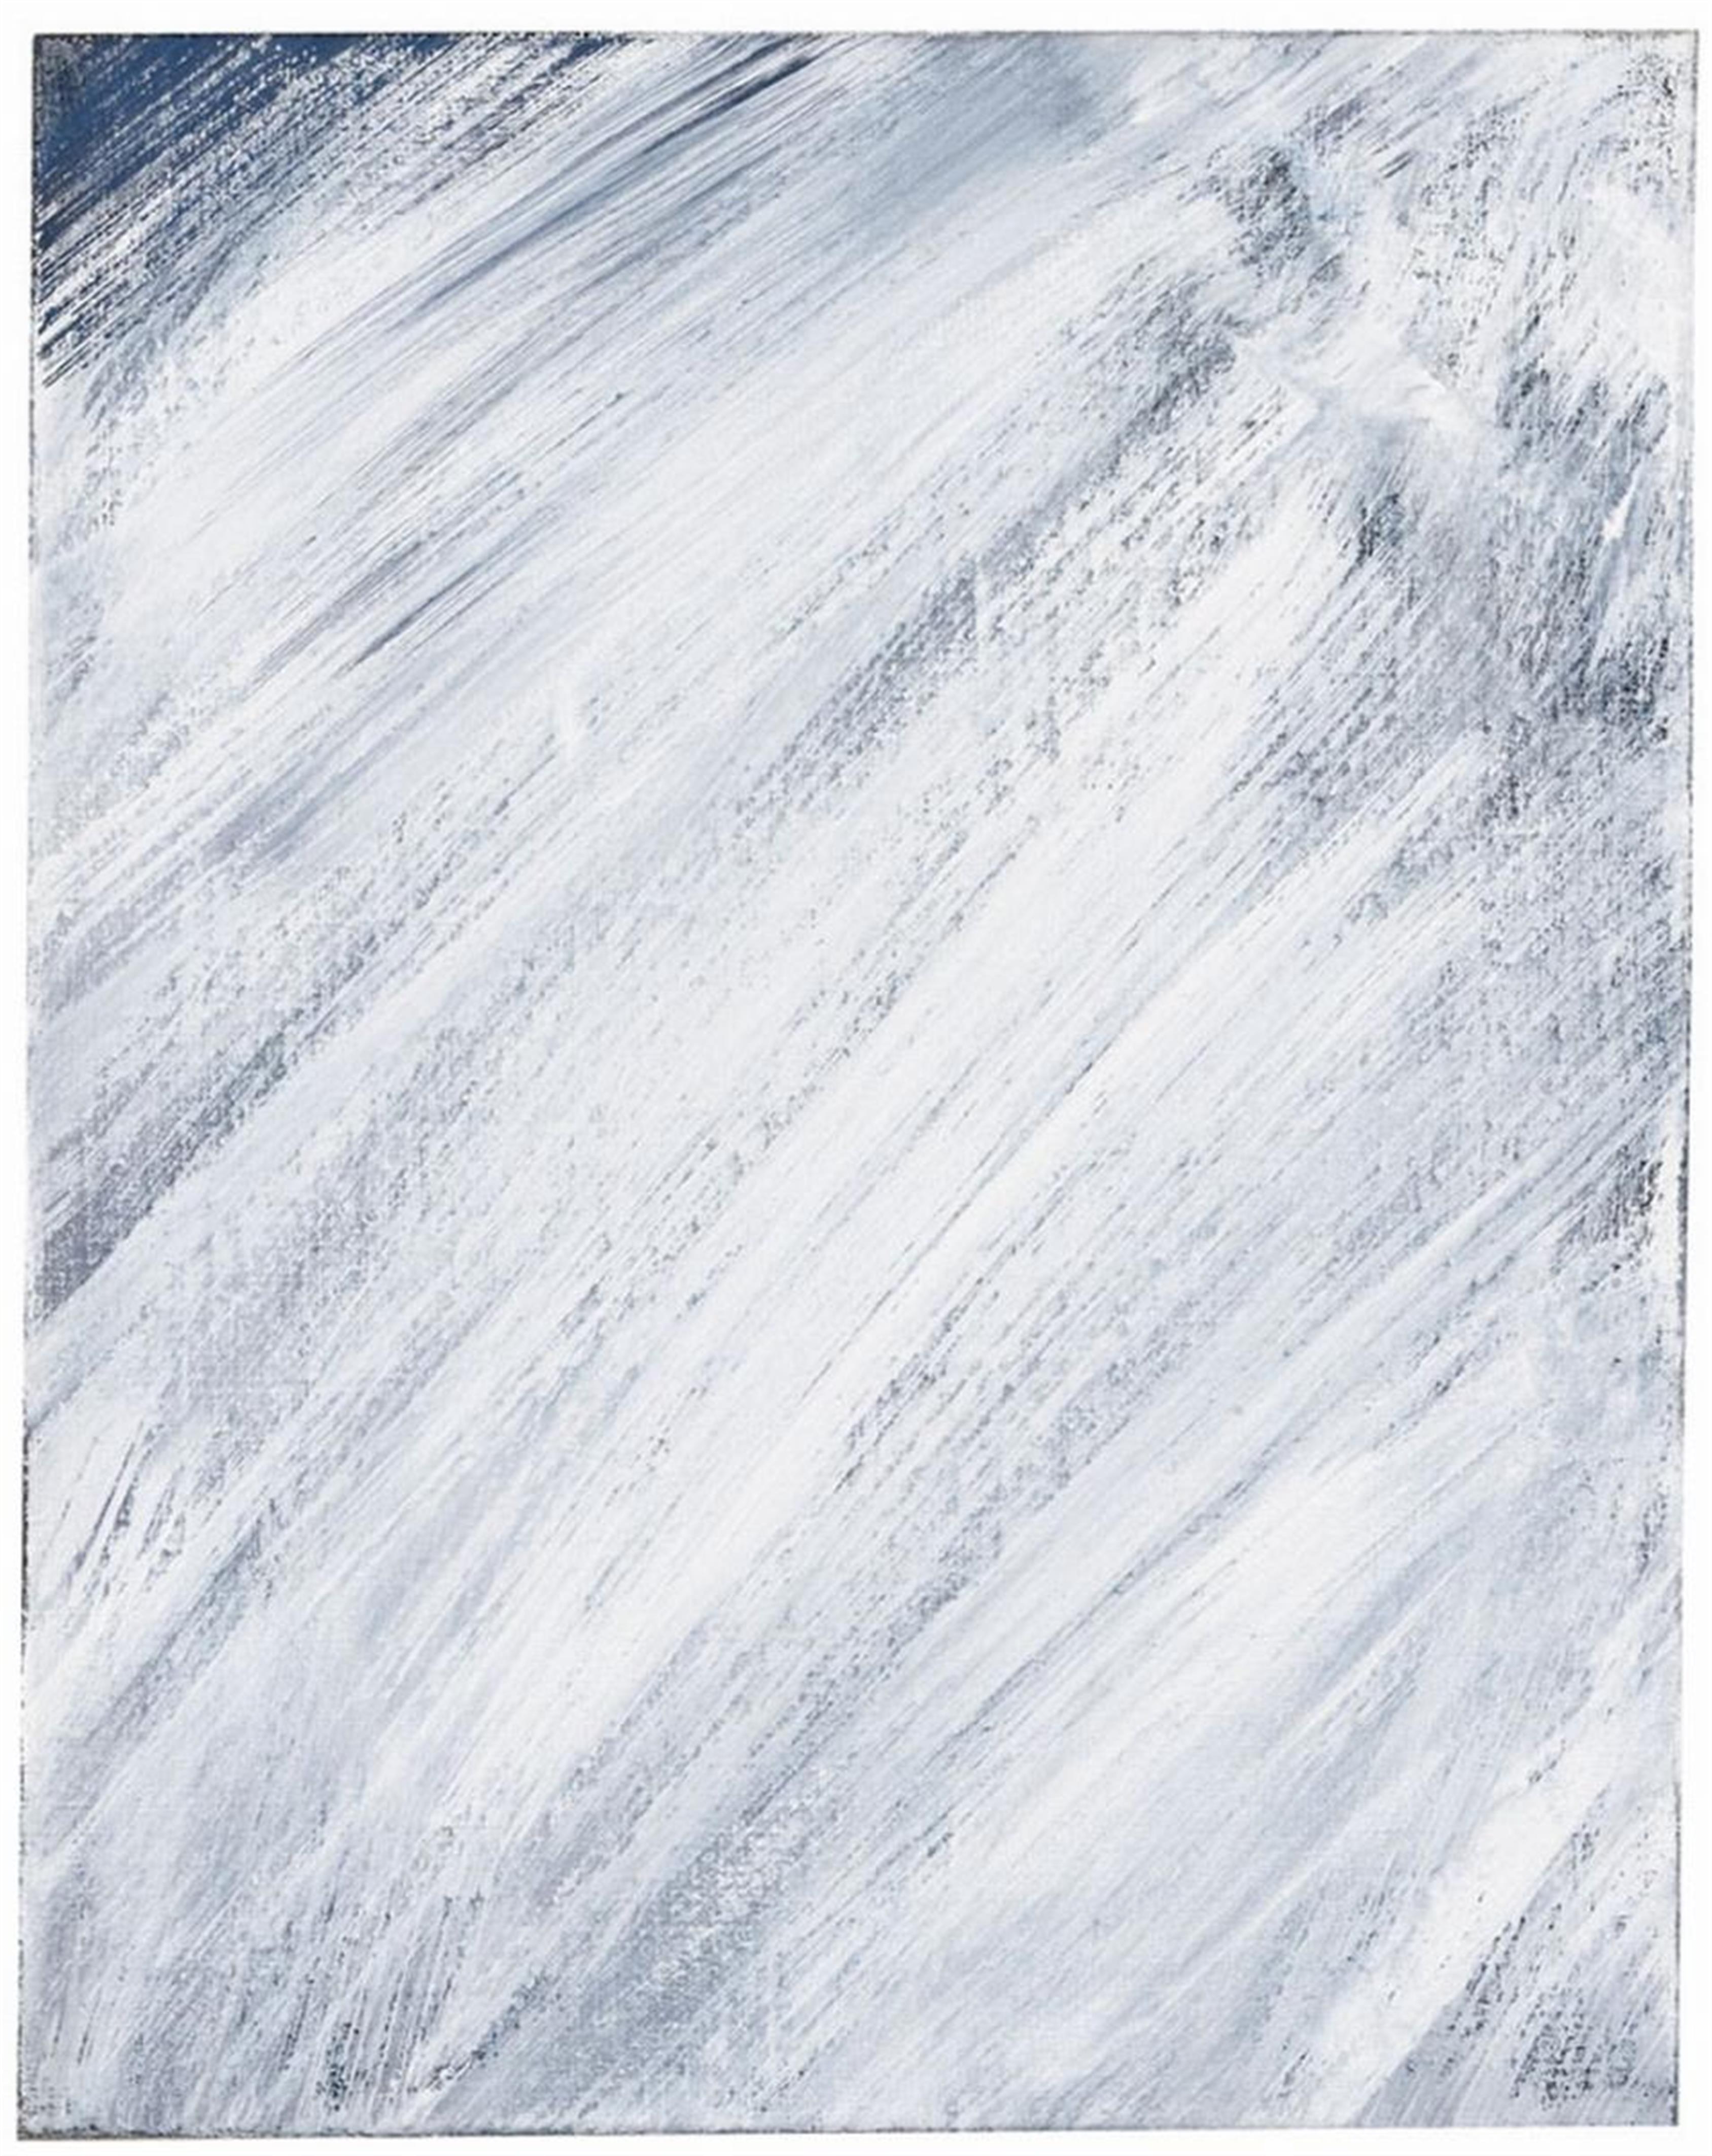 Raimund Girke - Uni sono - image-1